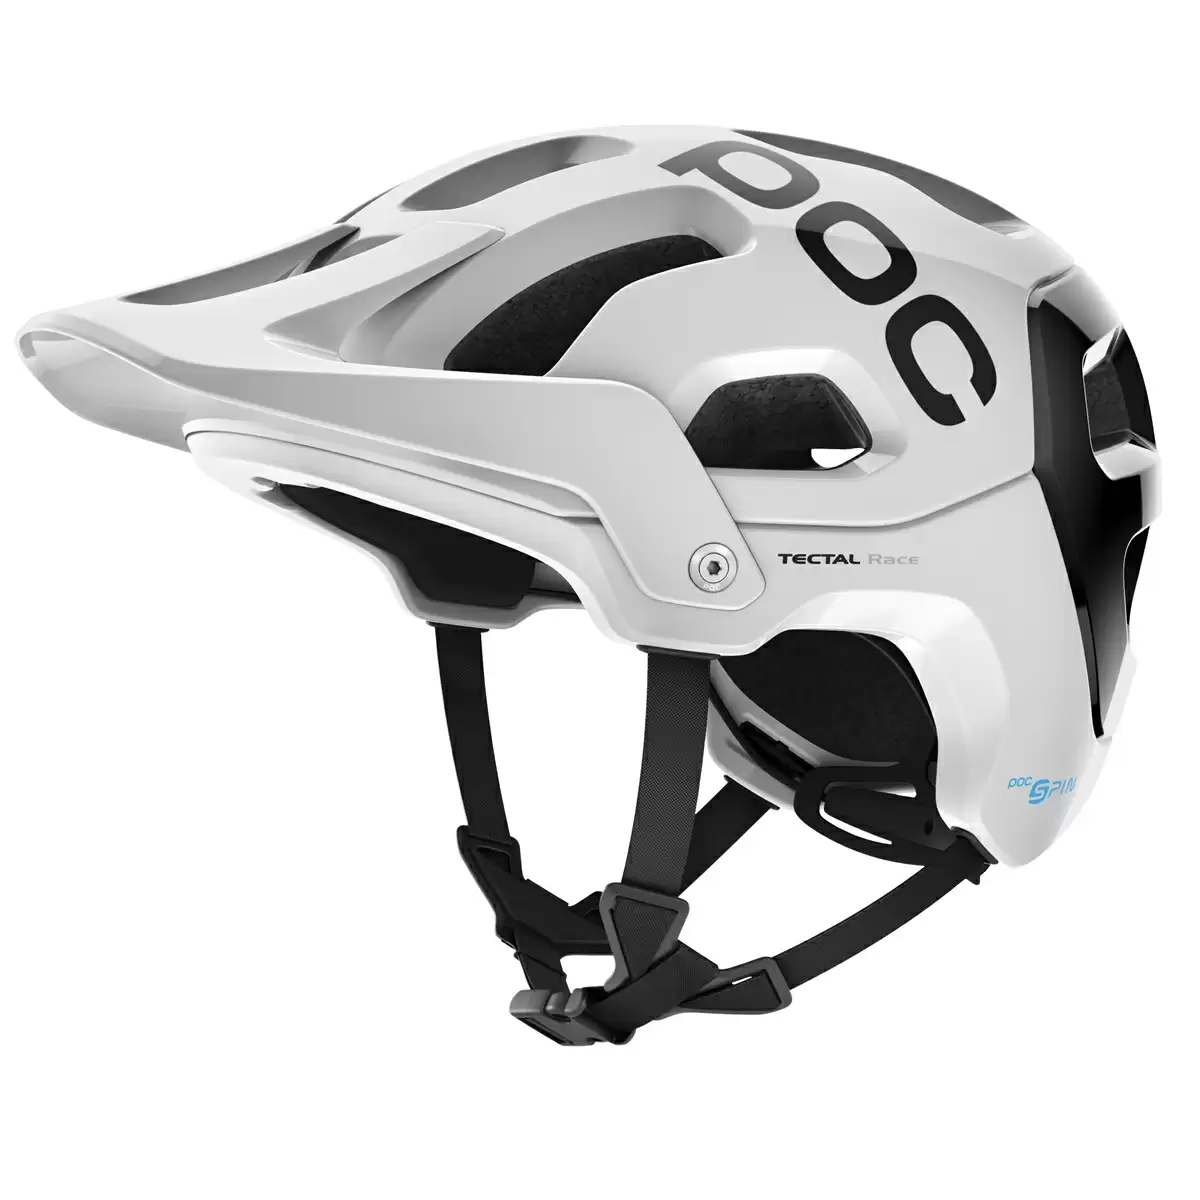 Enduro helmet Tectal Race Spin white size XL-XXL (59-62cm) - image